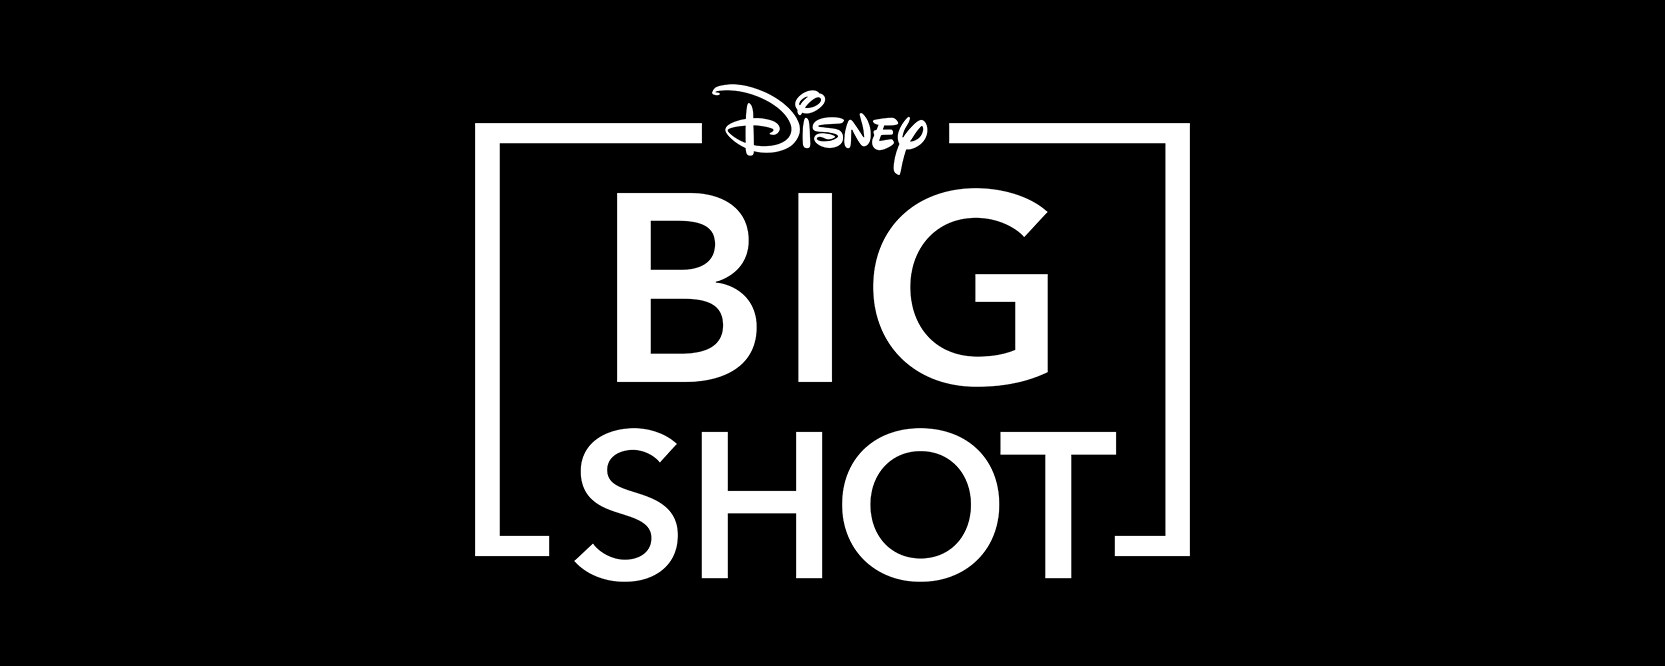 Big Shot Season 3 Details: Big Shot season 3: Disney Plus reveals release  date, know all details here - The Economic Times